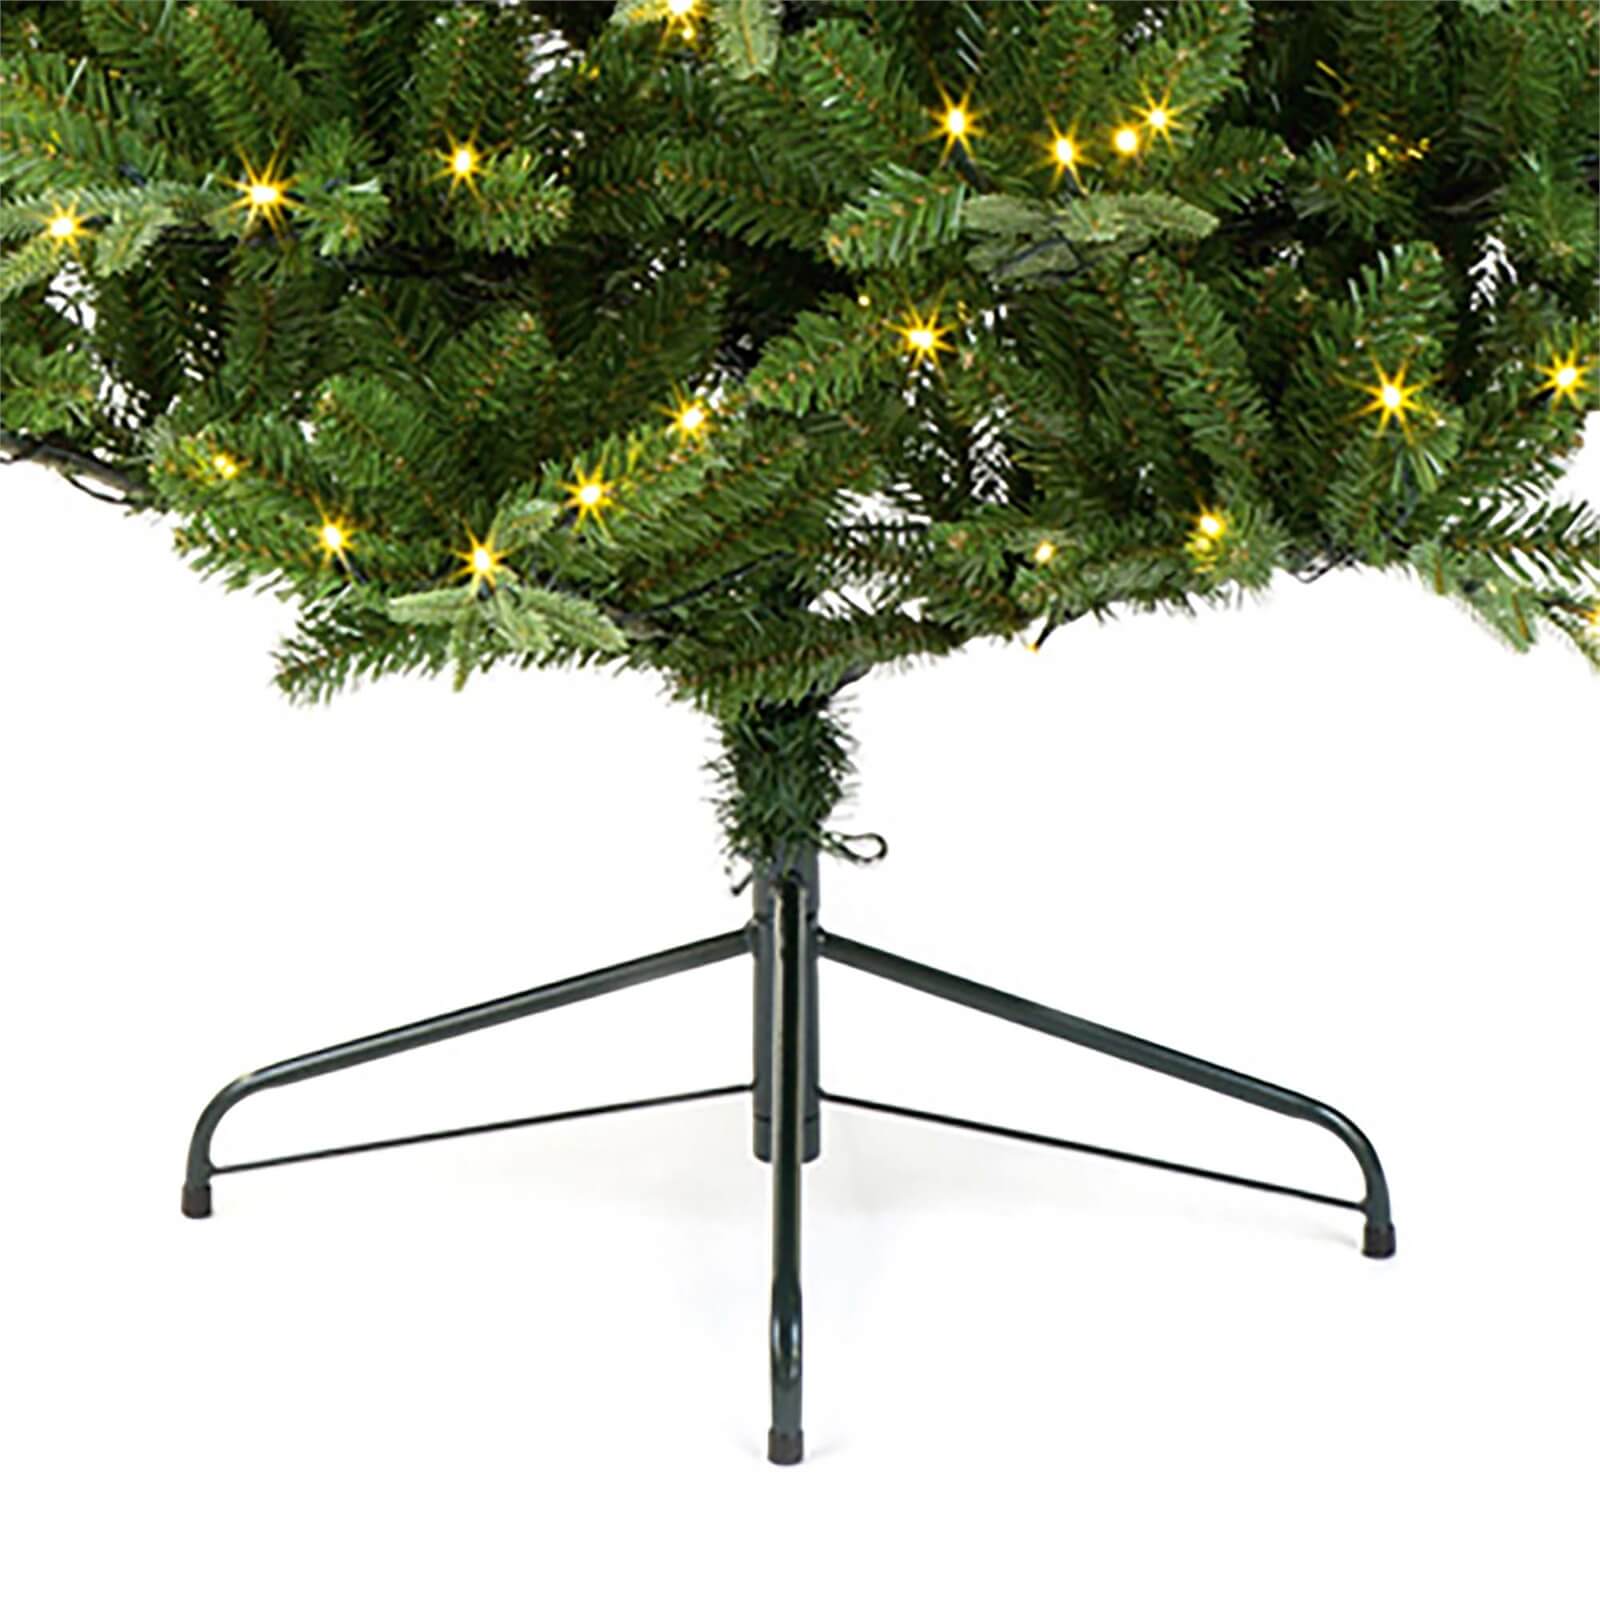 8ft Prelit Ashley Pine Christmas Tree (Indoor/Outdoor)